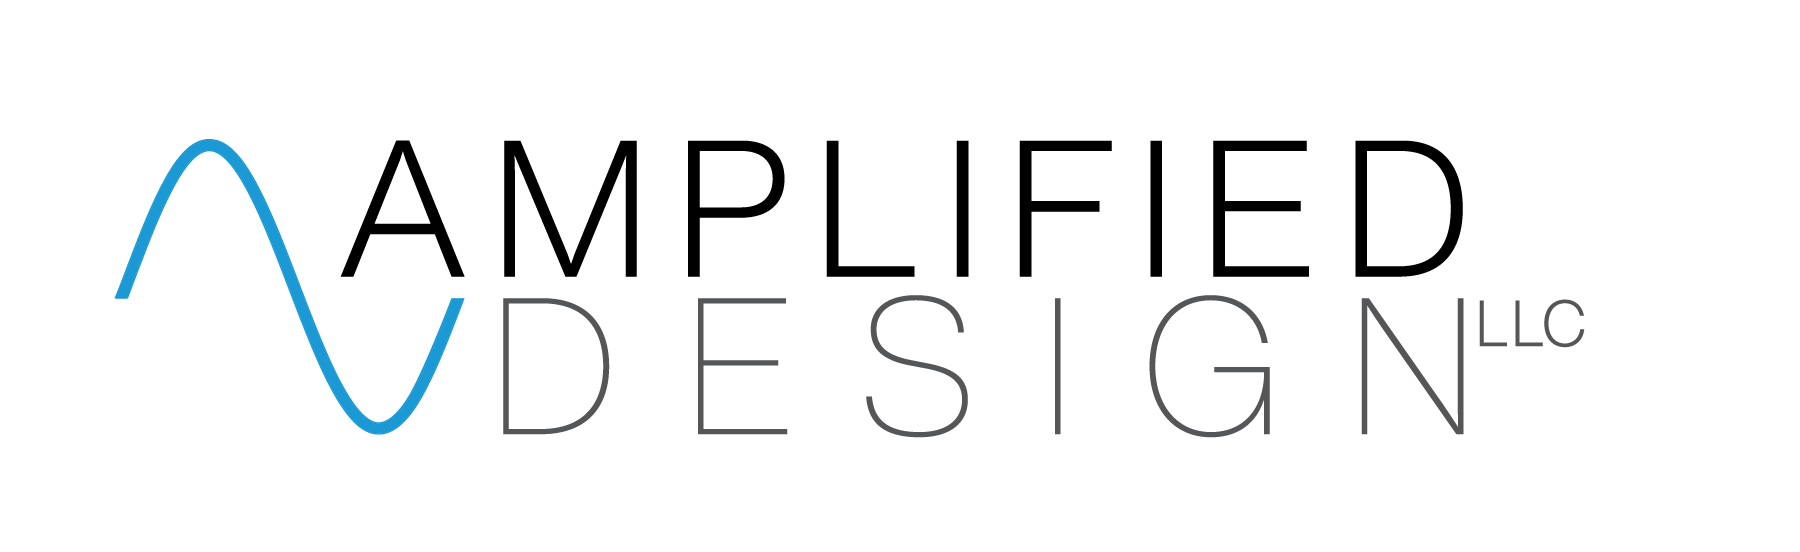 Amplified Design